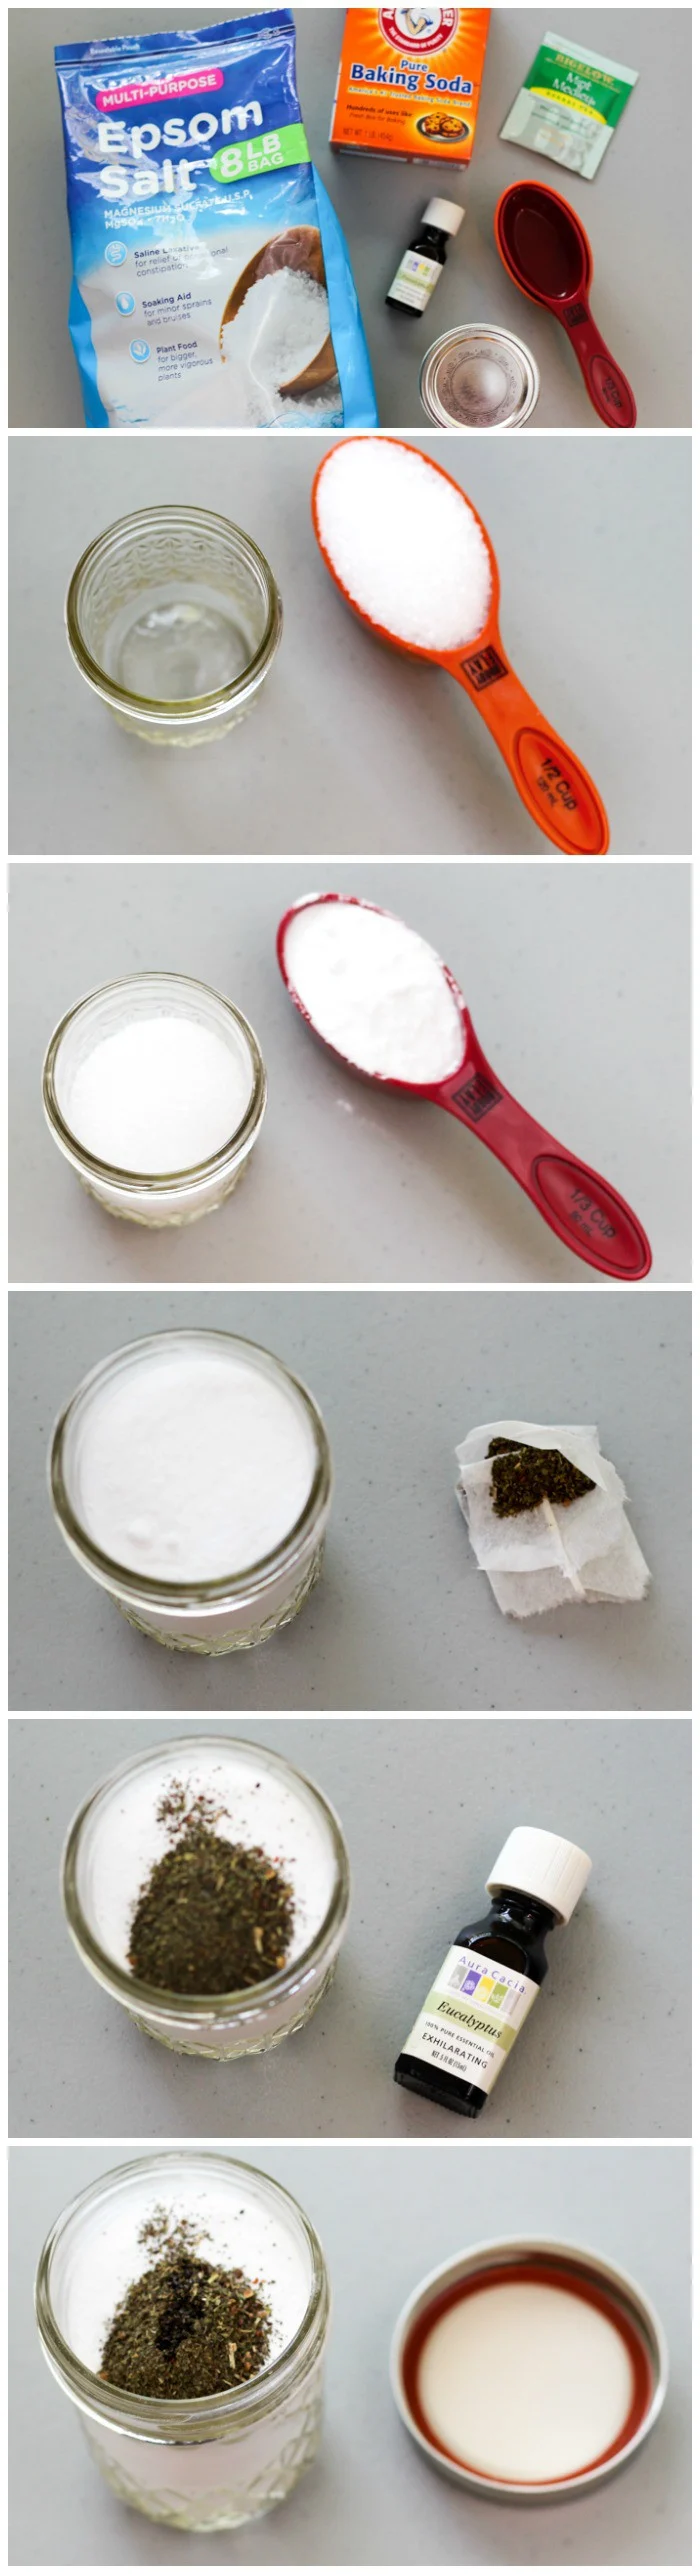 How to make a DIY foot soak - full tutorial on ingredients plus a free printable